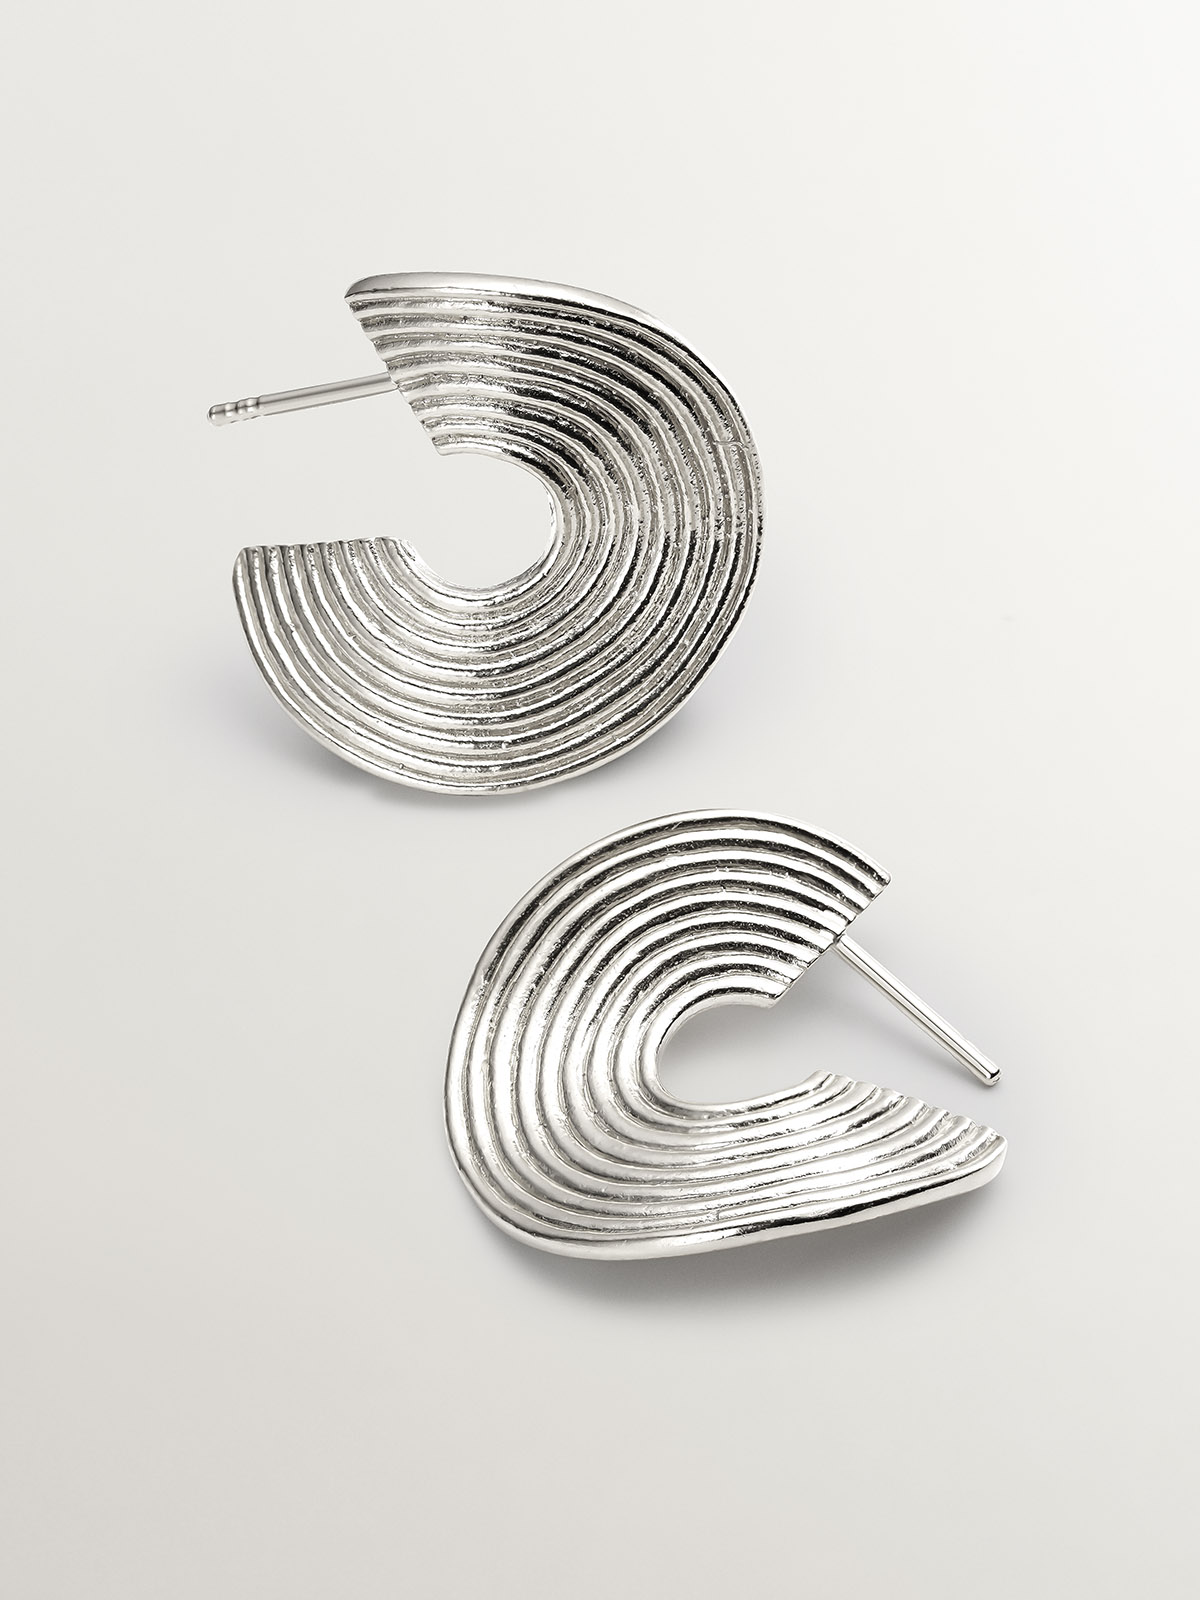 Medium-sized 925 silver hoop earrings with embossed and irregular shape